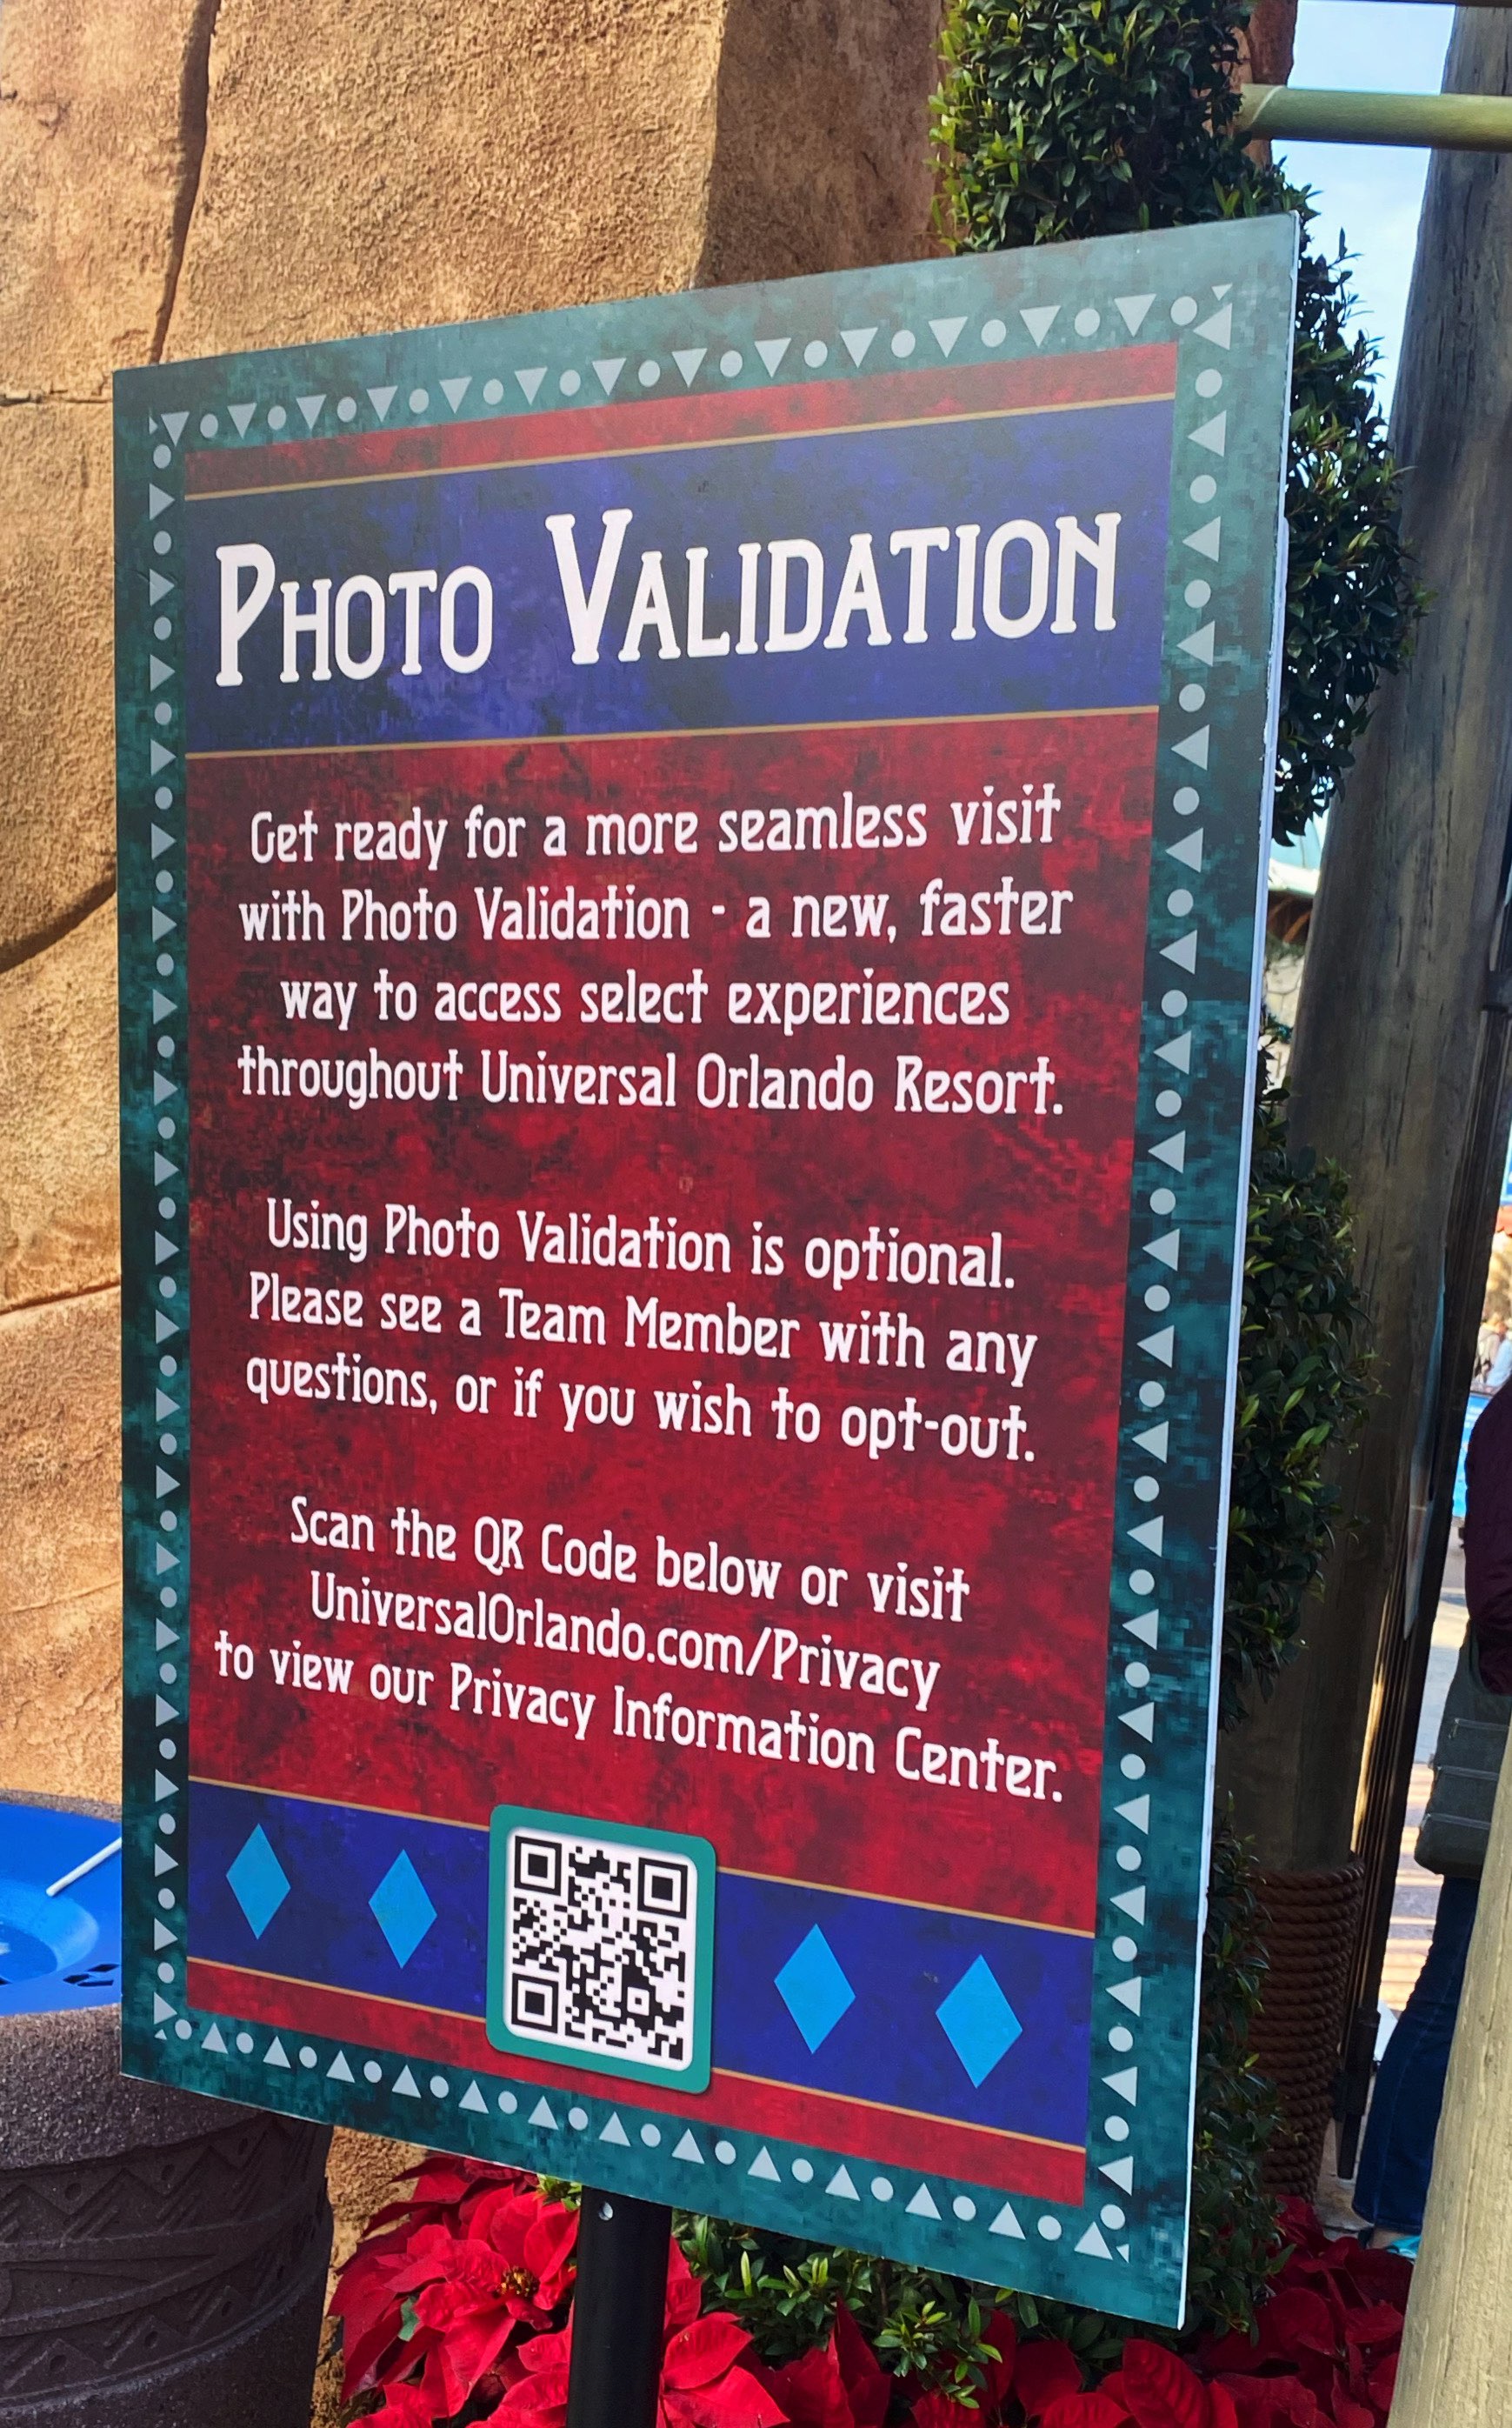 Photo Validation Information at Universal Orlando Resort